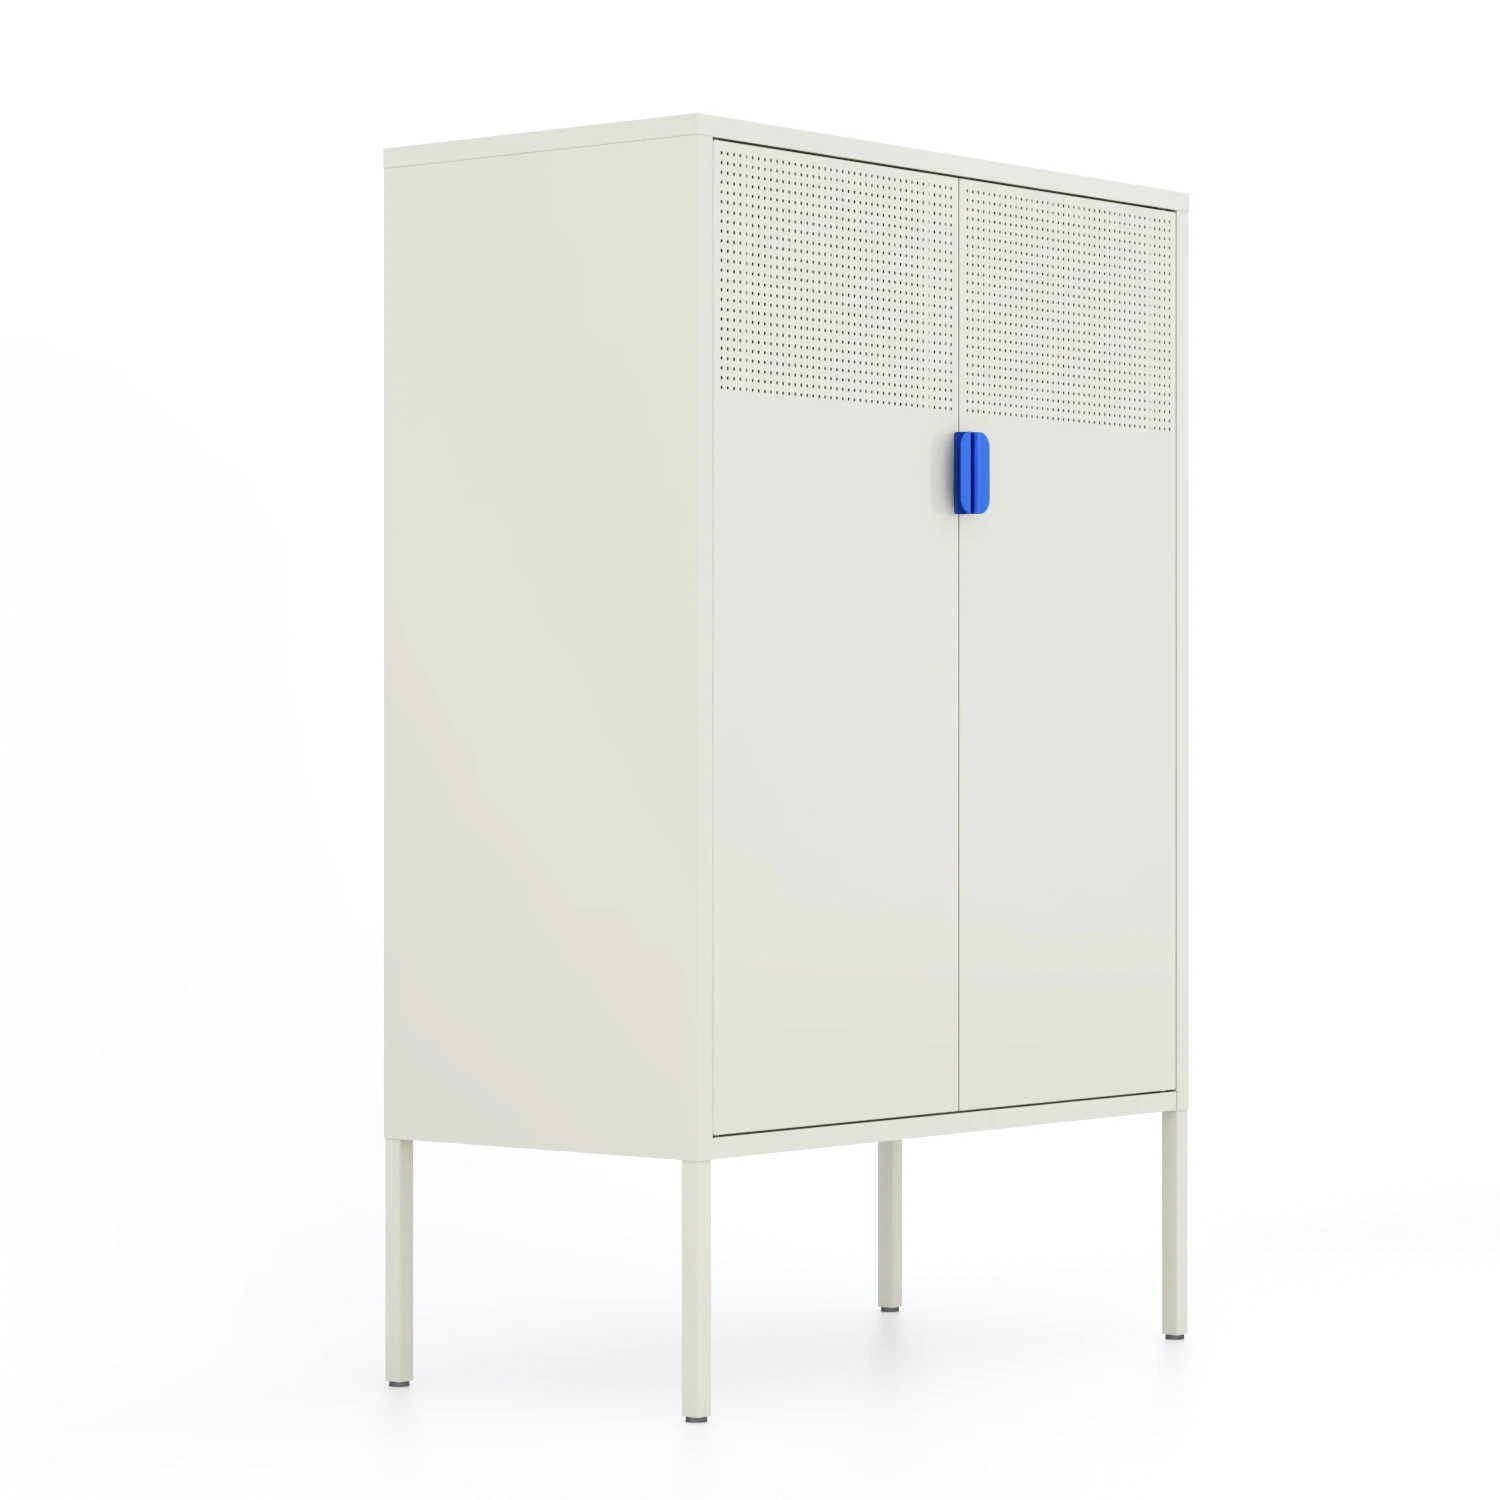 

Metal Storage Locker Cabinet, Adjustable Shelves Free Standing Ventilated Sideboard Steel Cabinets